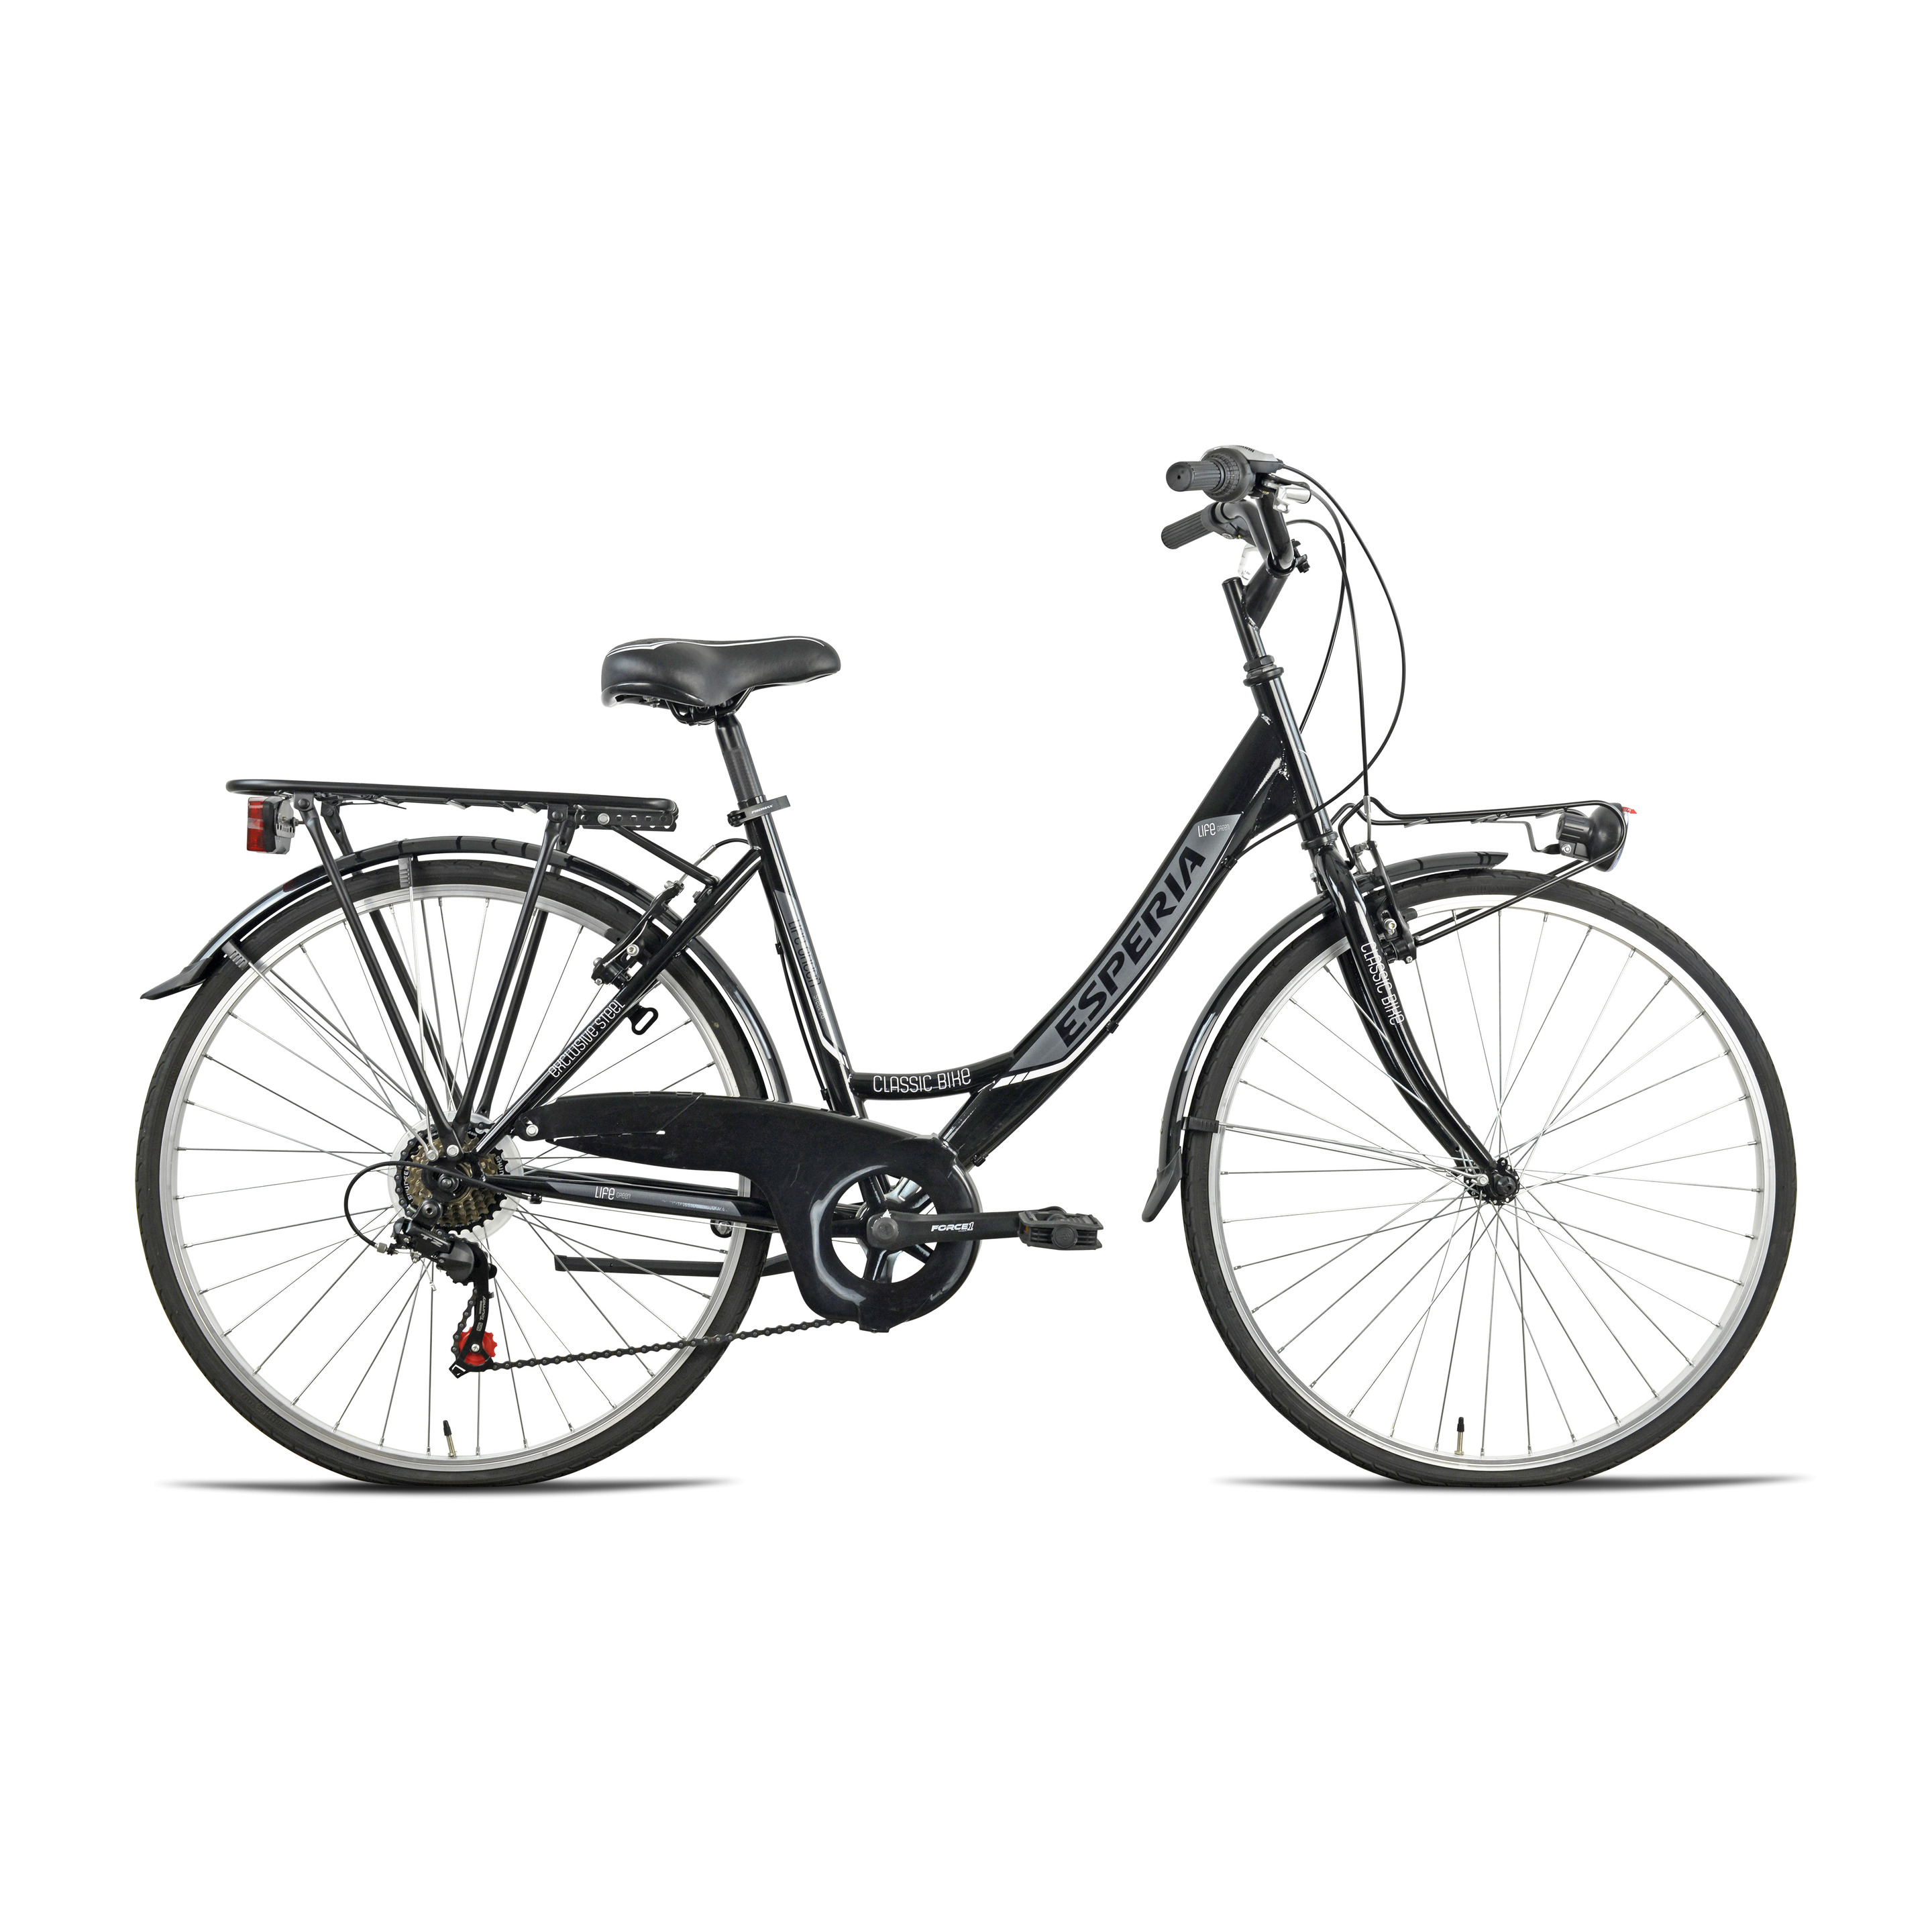 Bicicleta Esperia 2100 Mono 26 Negro Tz50 6v Ciudad